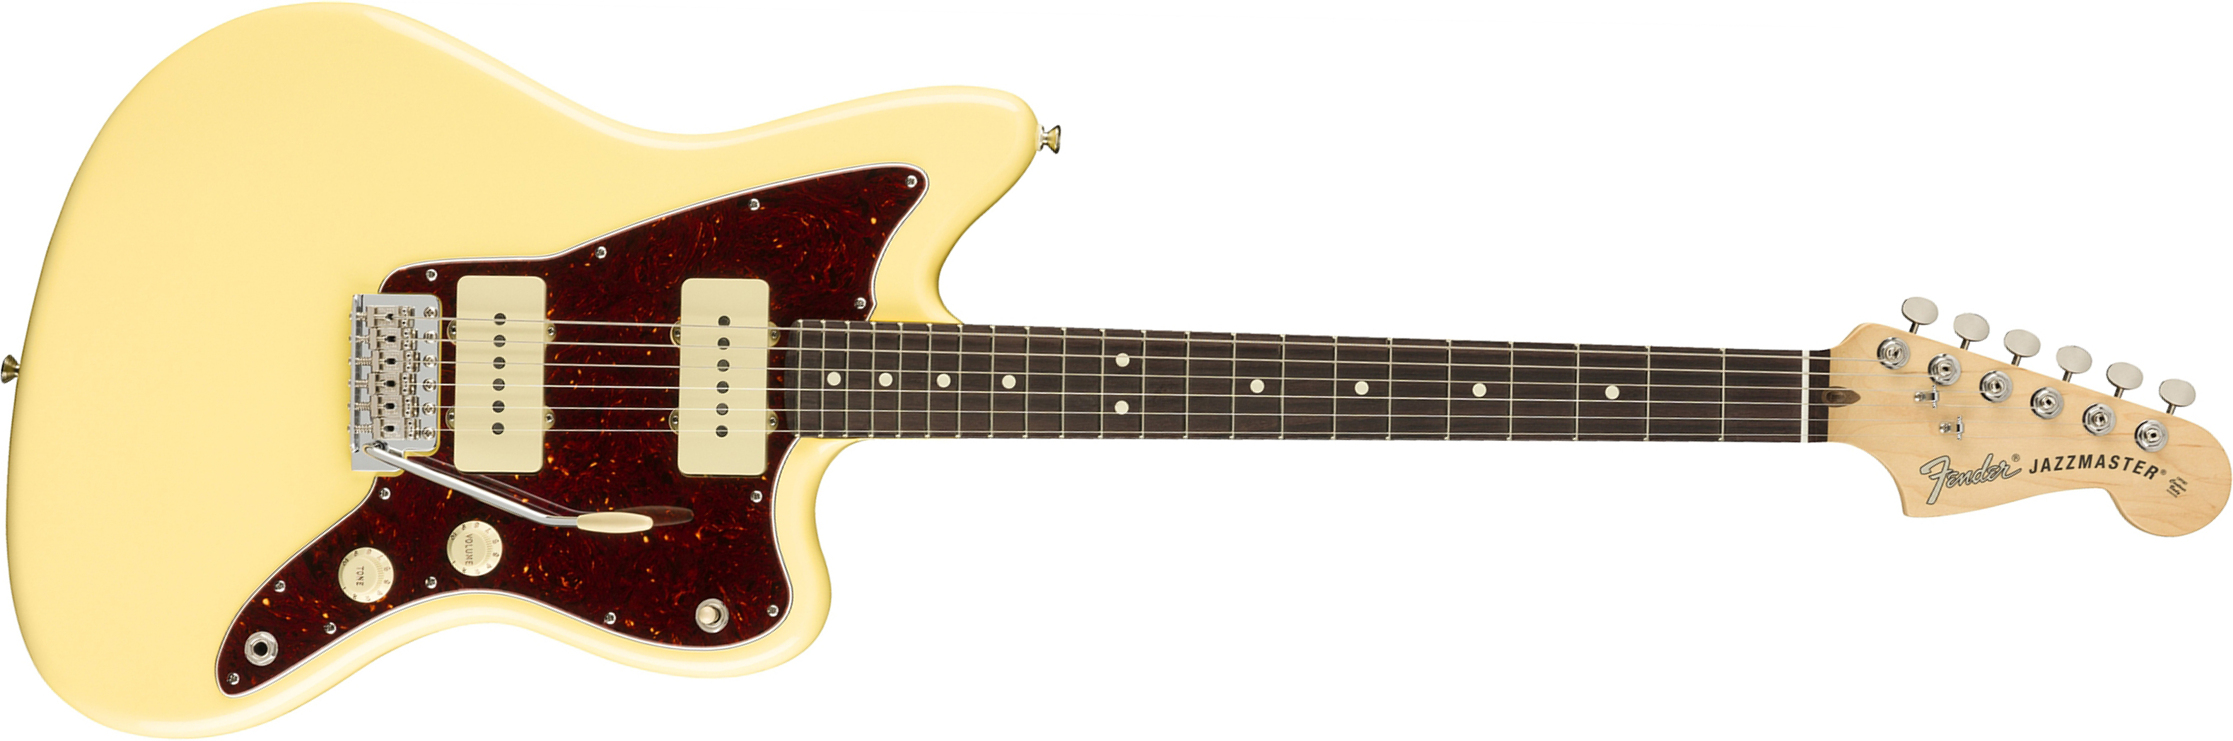 Fender Jazzmaster American Performer Usa Ss Rw - Vintage White - Guitarra eléctrica de doble corte. - Main picture